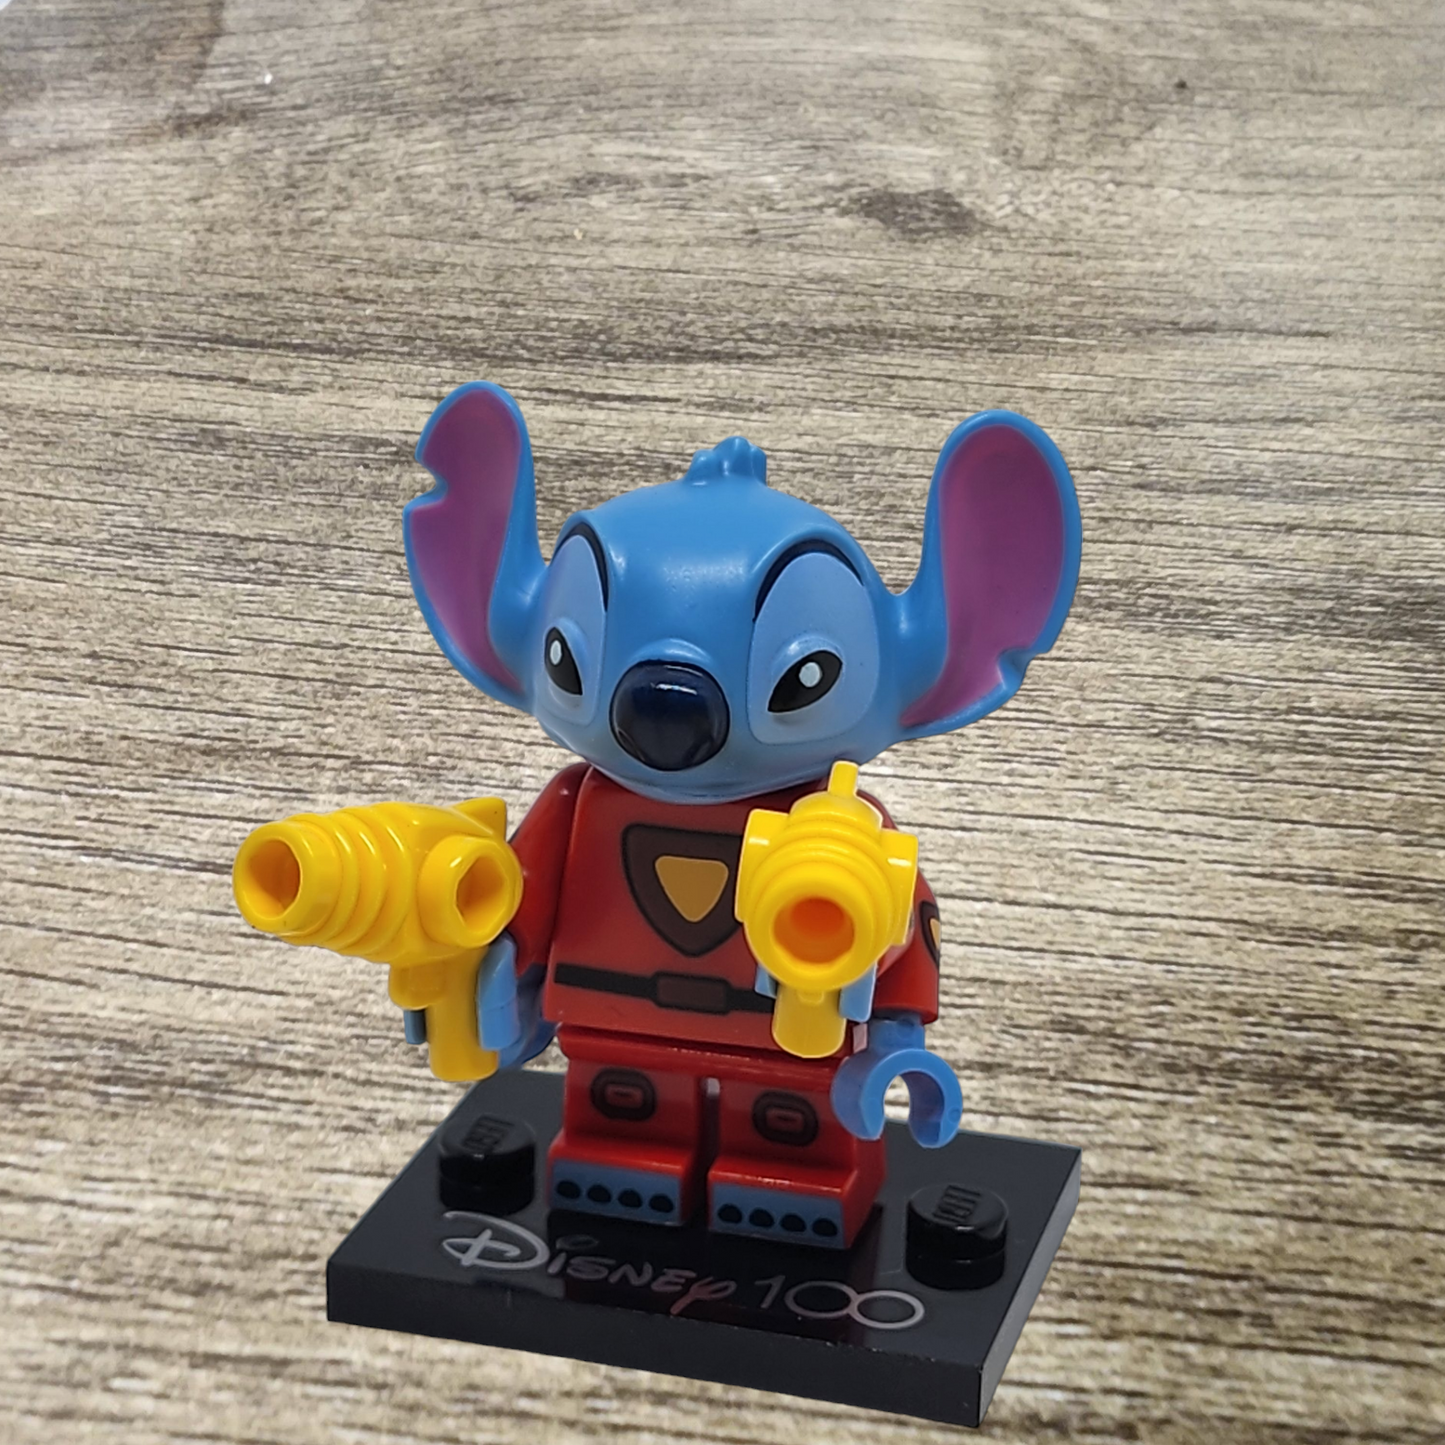 Lego Stitch 626 Minifigure Disney 100 dis107 Lilo Red